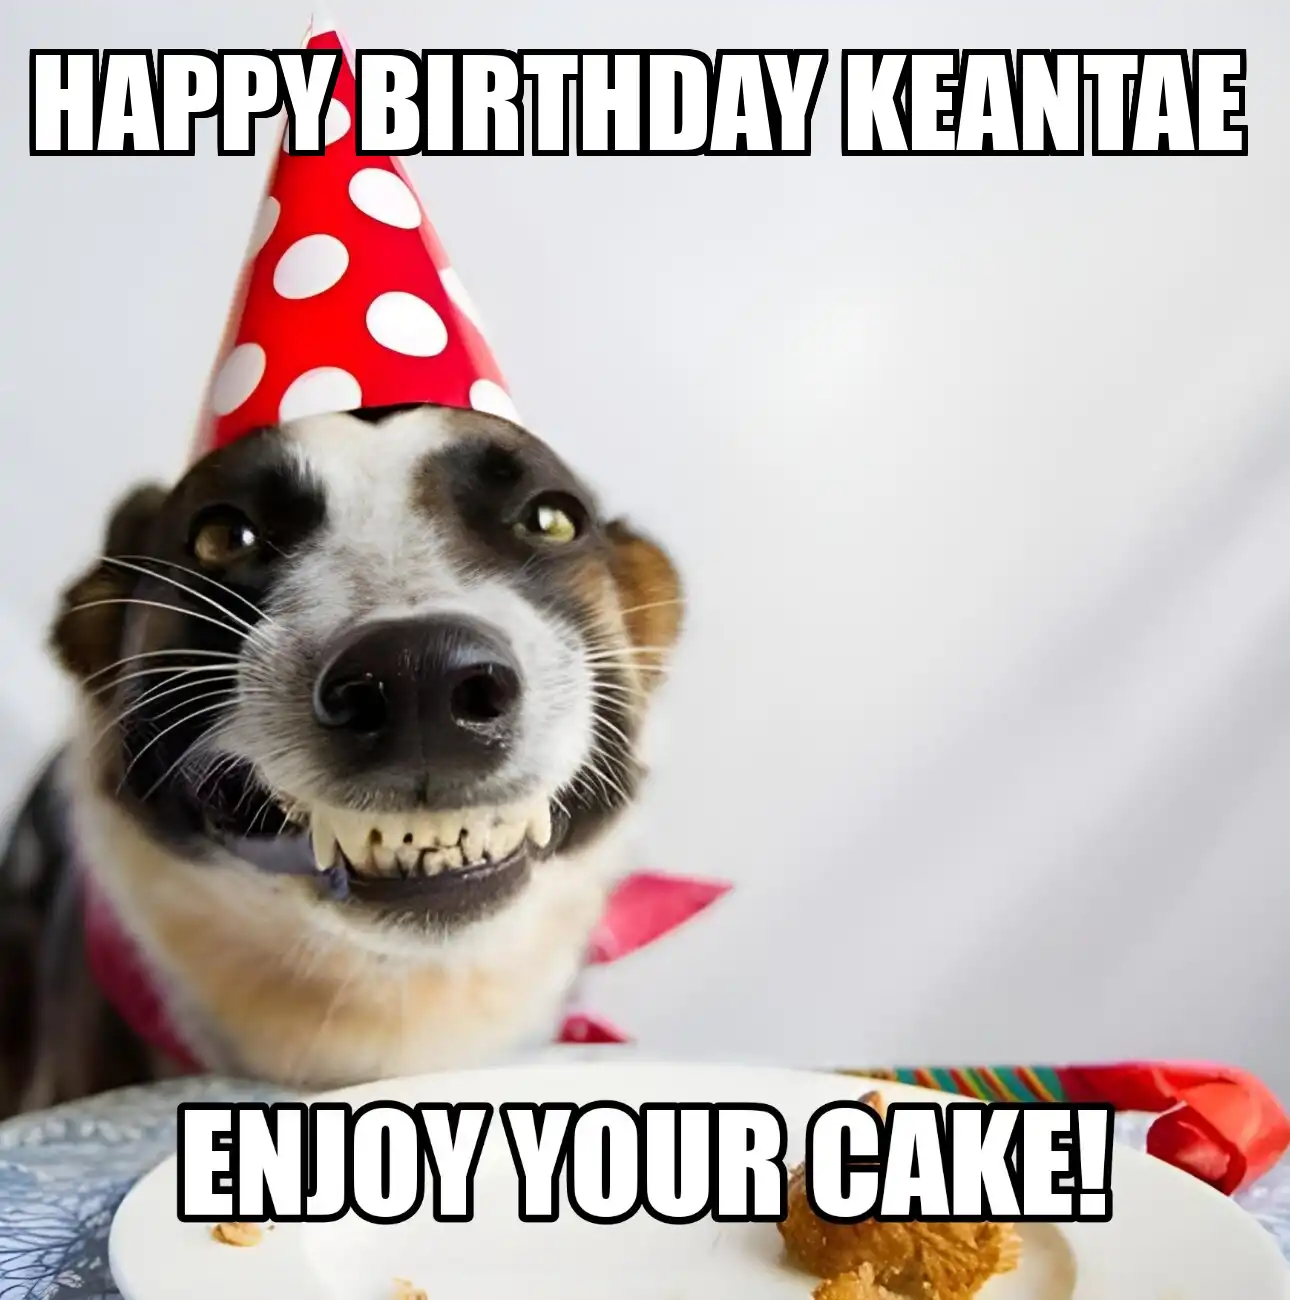 Happy Birthday Keantae Enjoy Your Cake Dog Meme